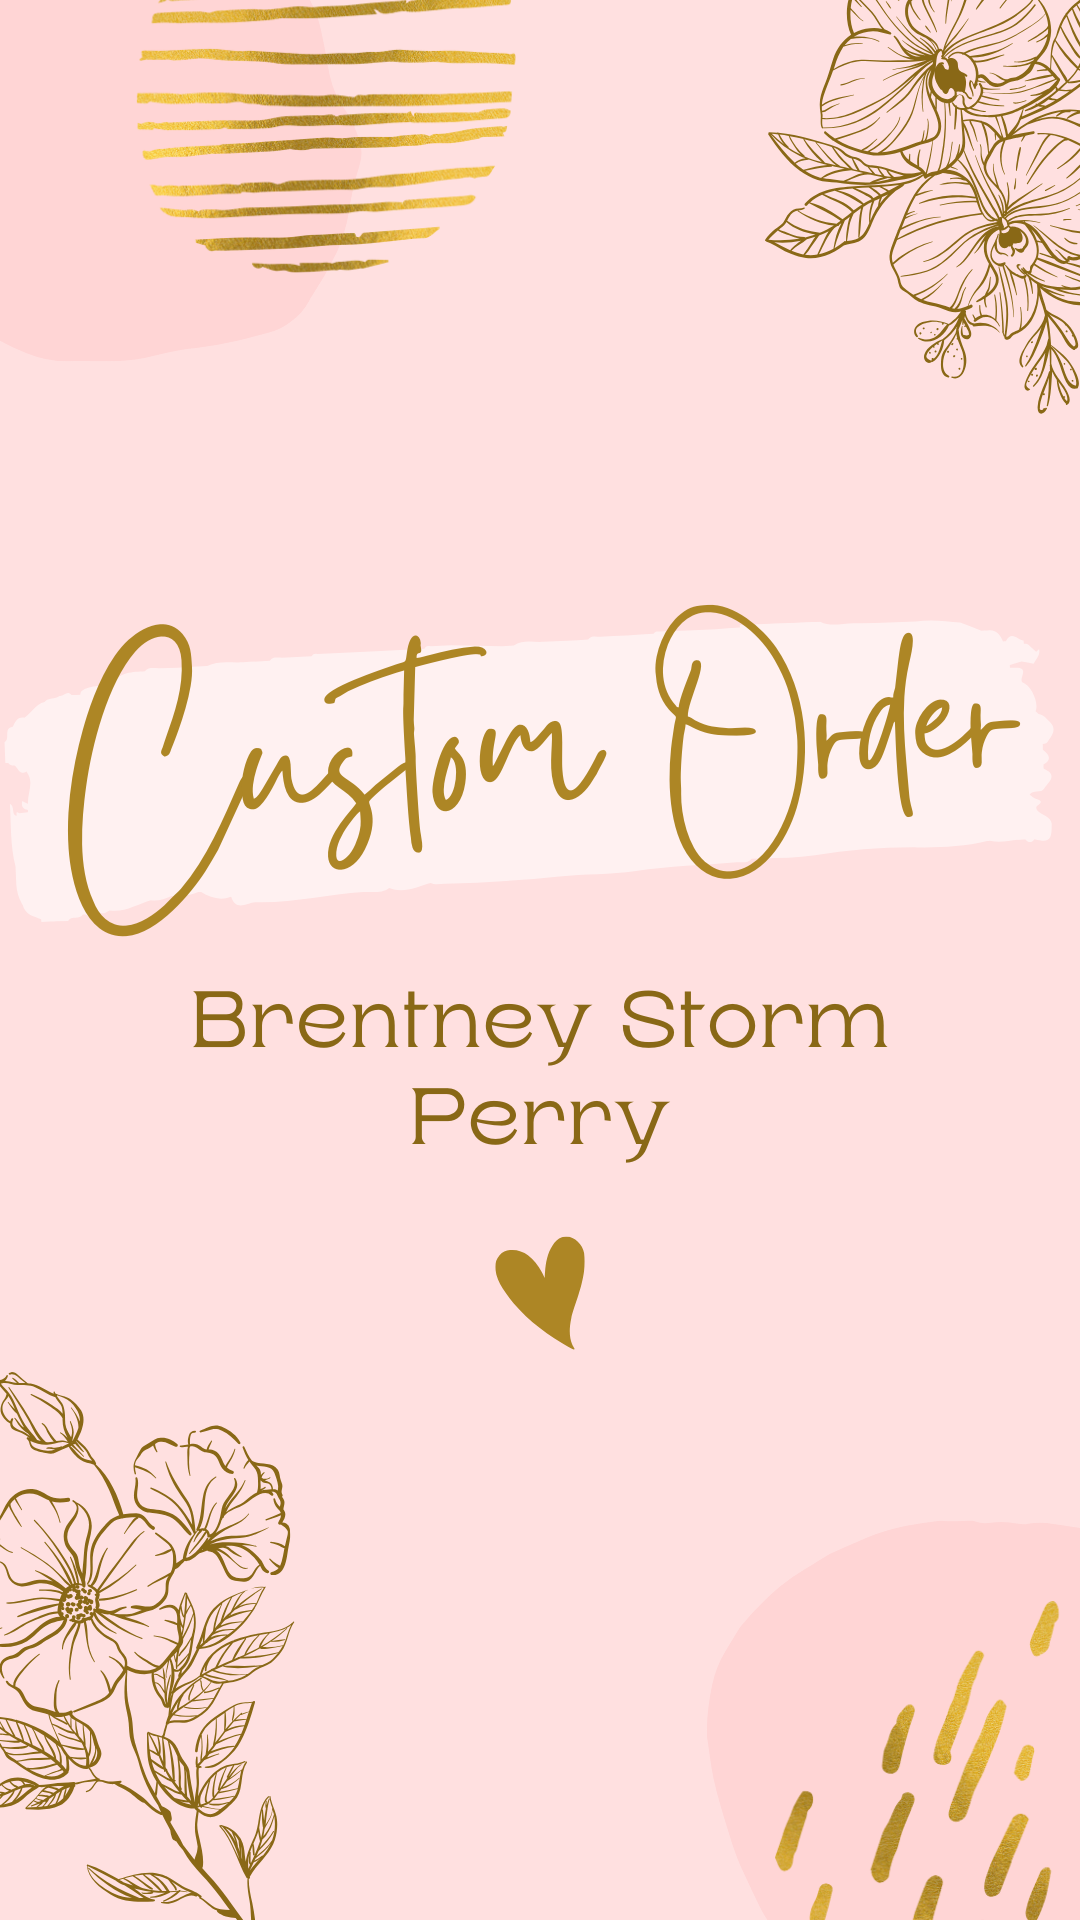 Custom Order | Brentney Storm Perry